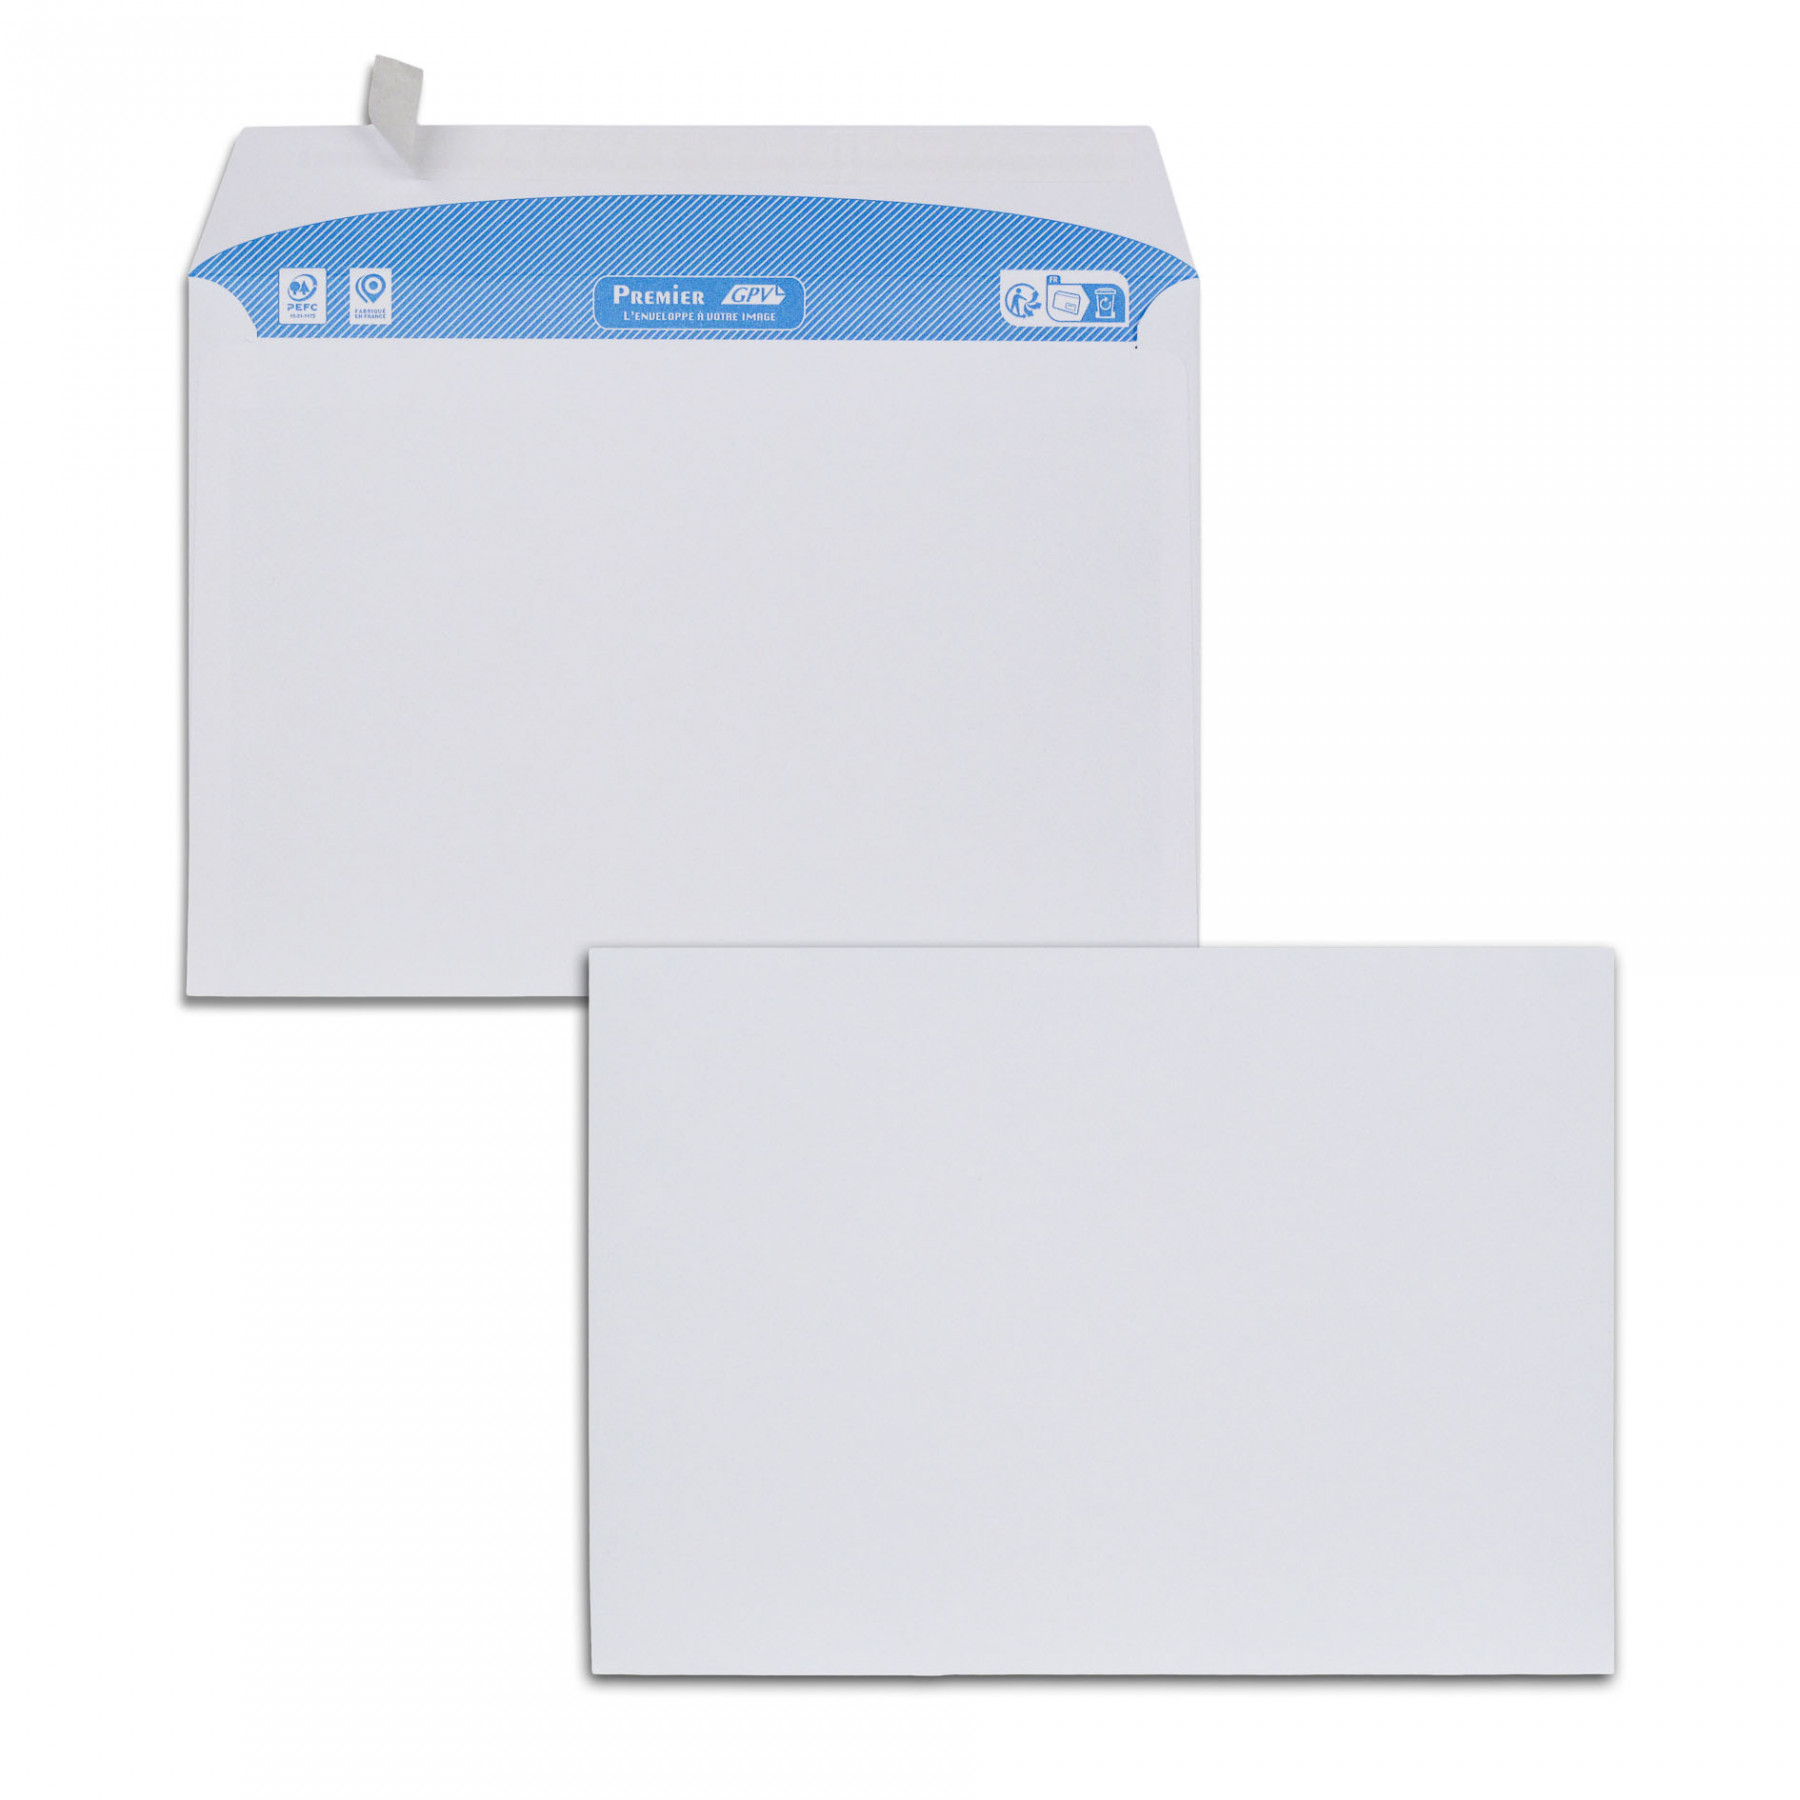 Boîte de 70 enveloppes blanches C5 162x229 80g/m² bande siliconée